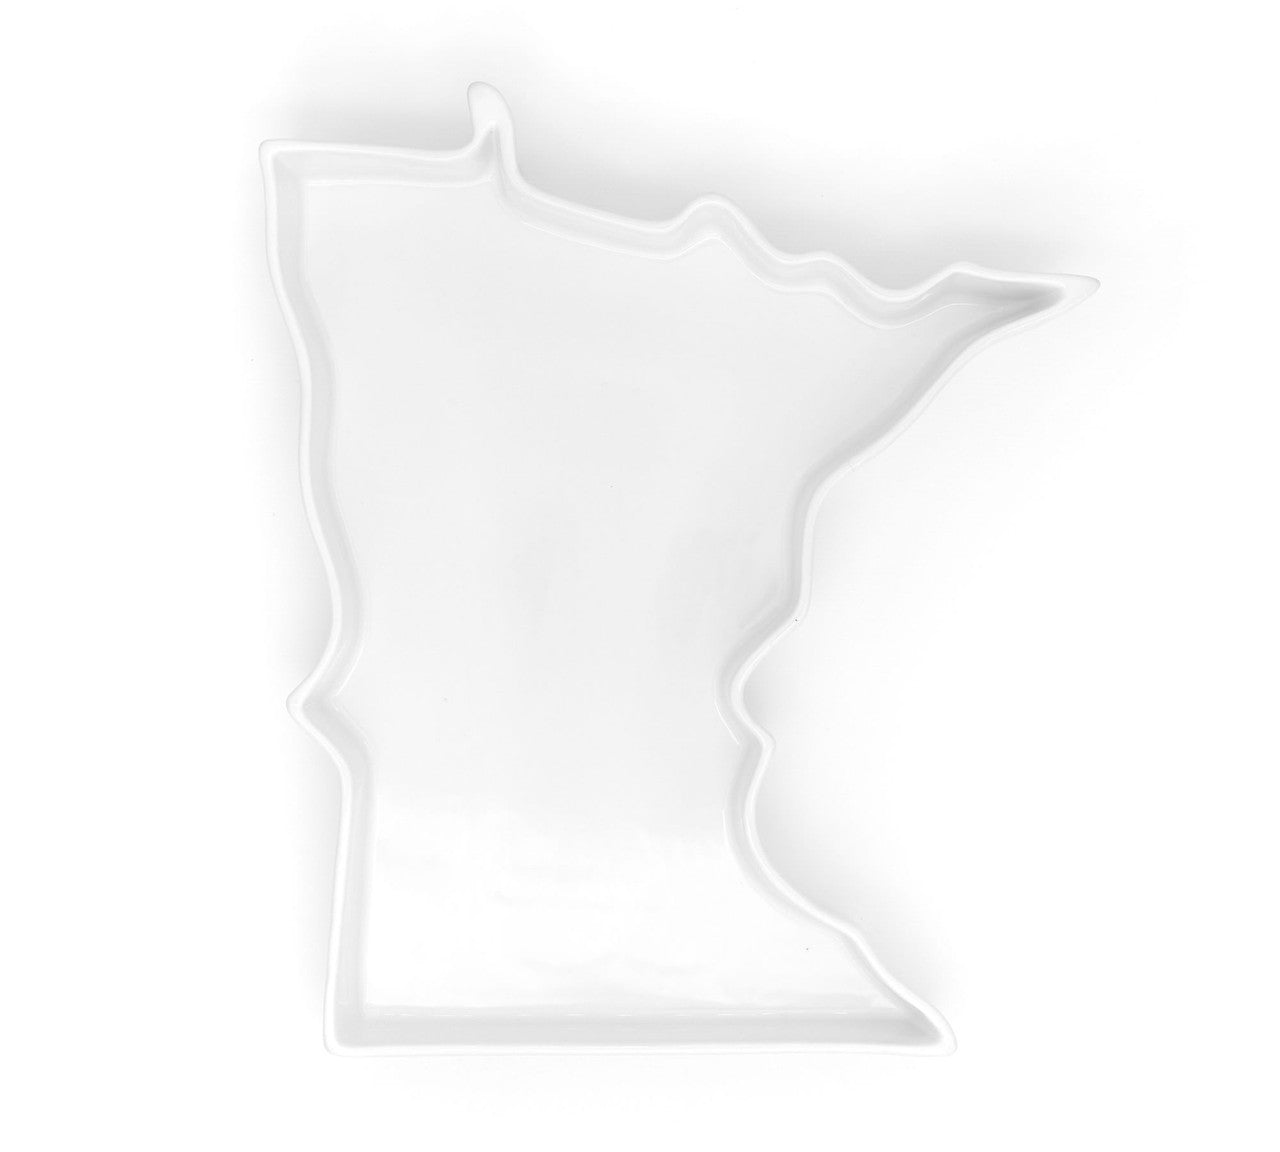 Minnesota State Plate